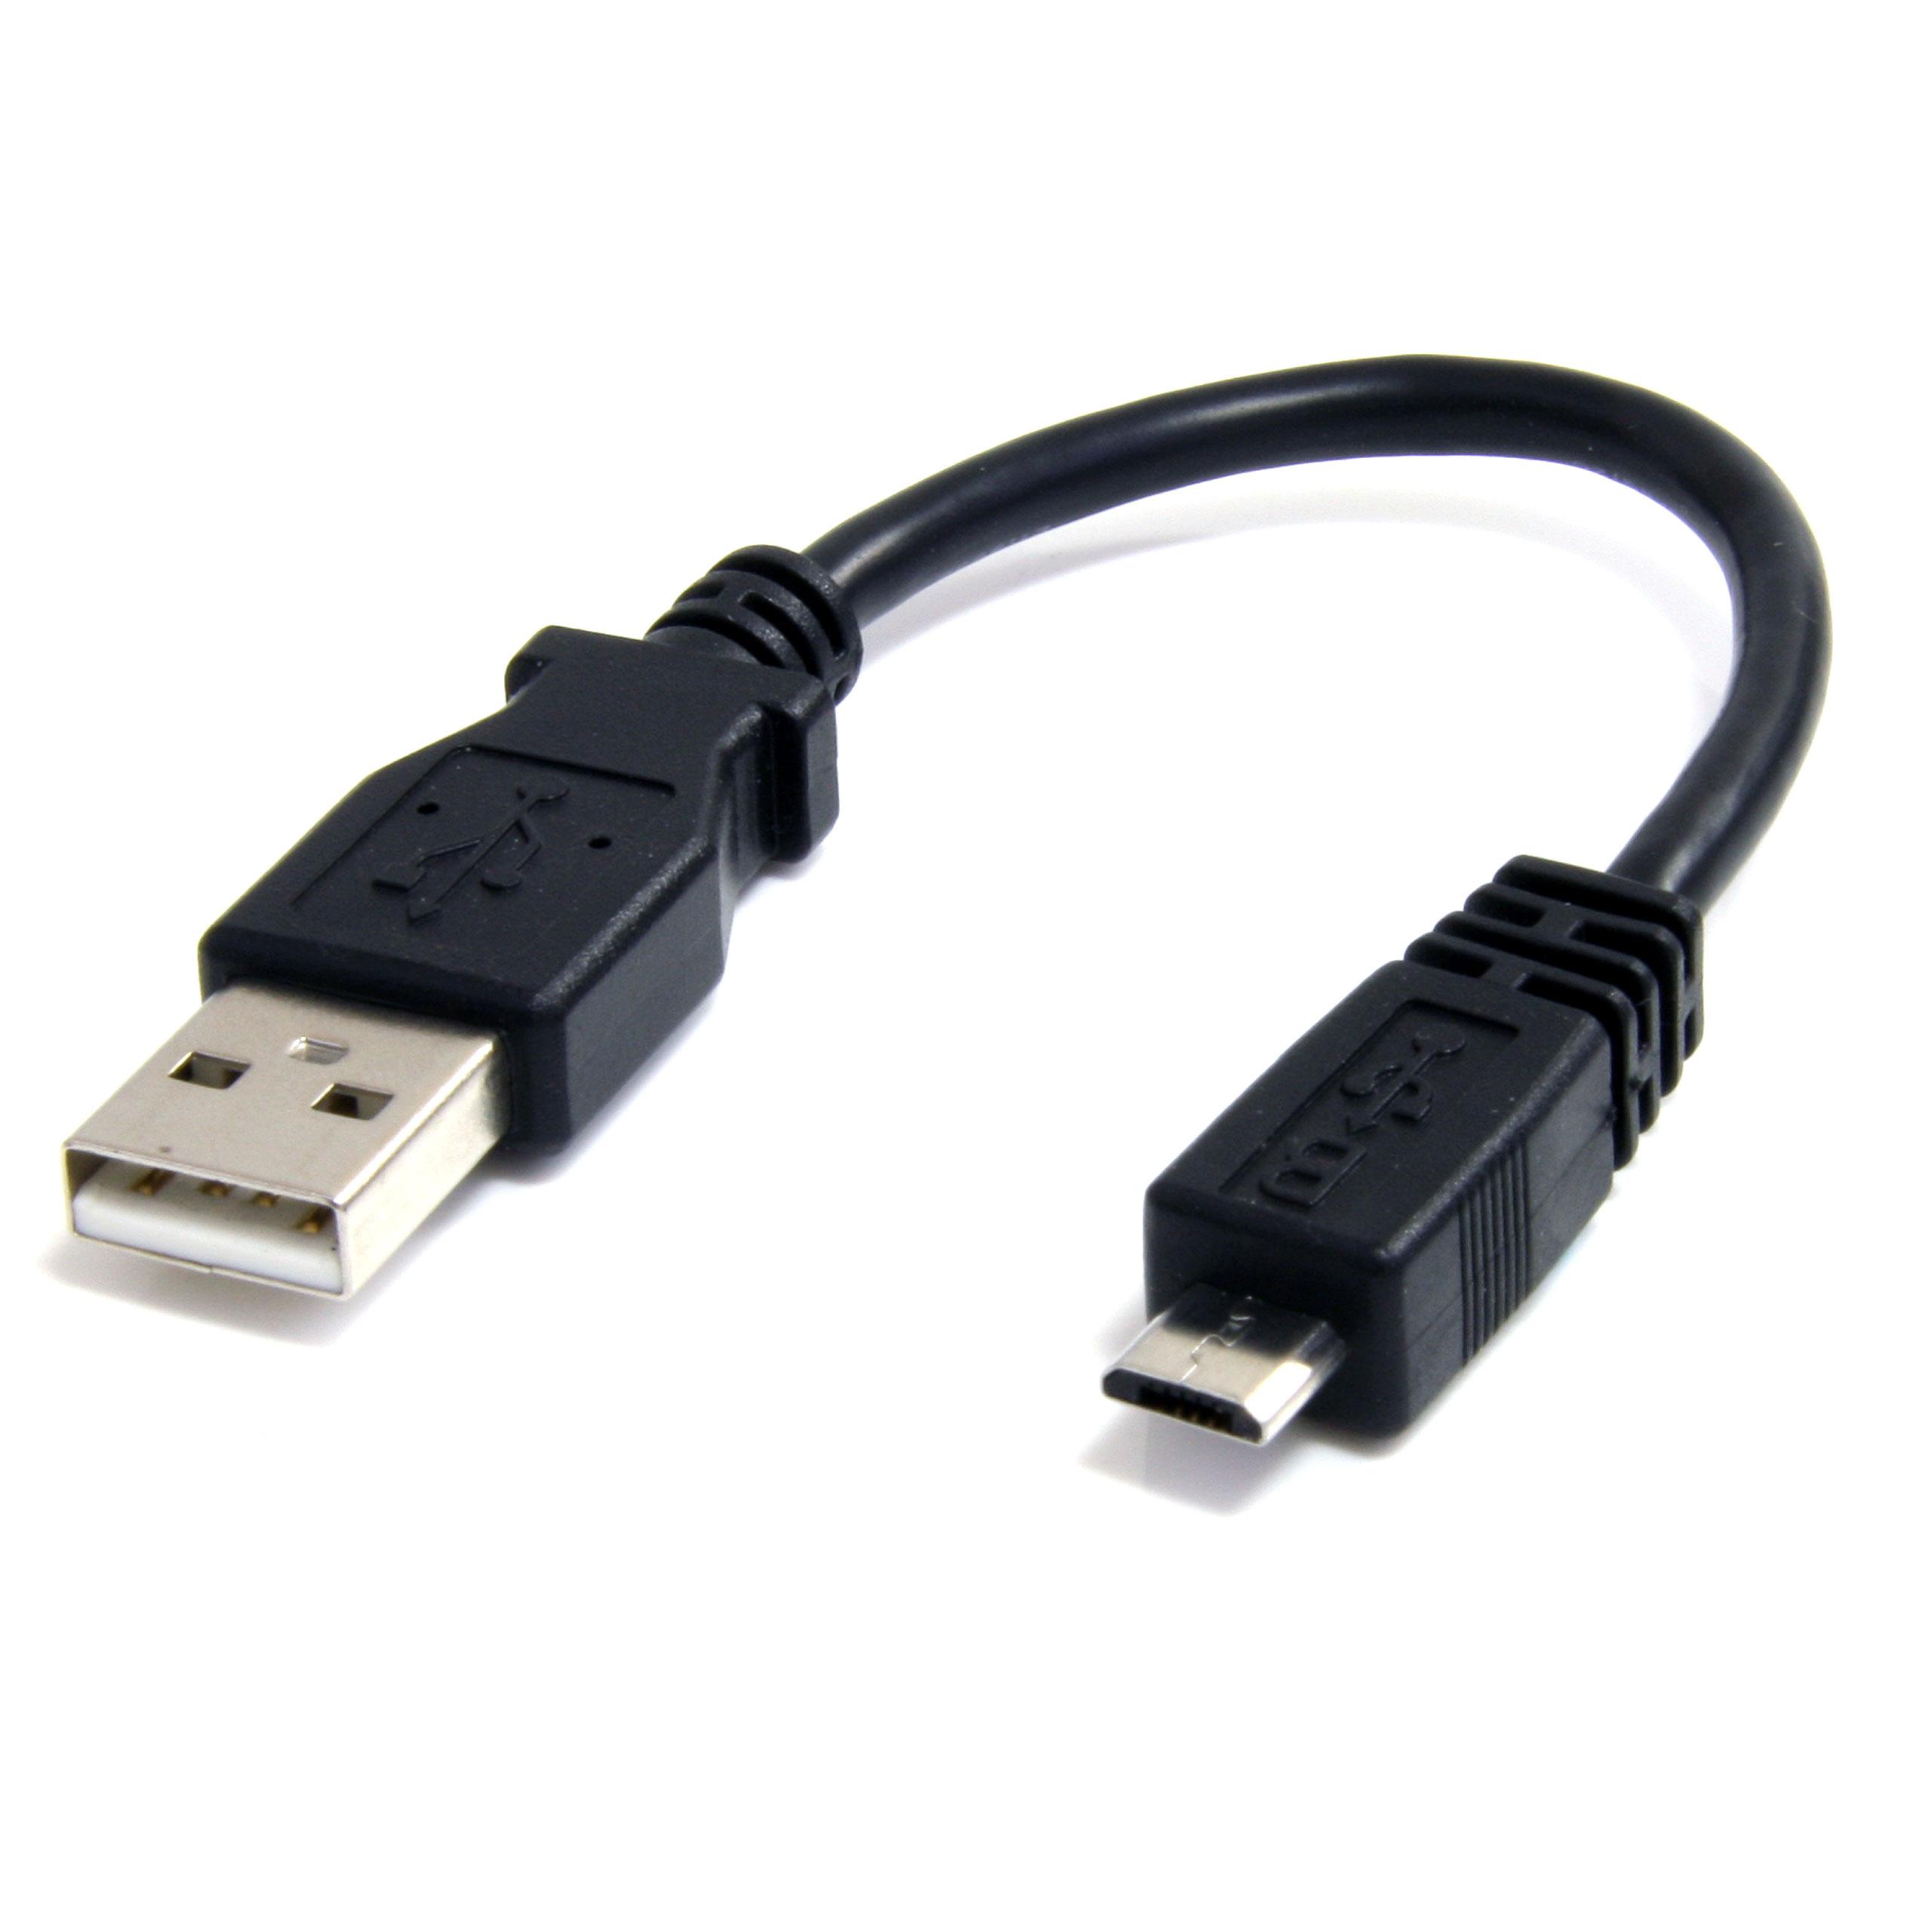 A: MICRO USB